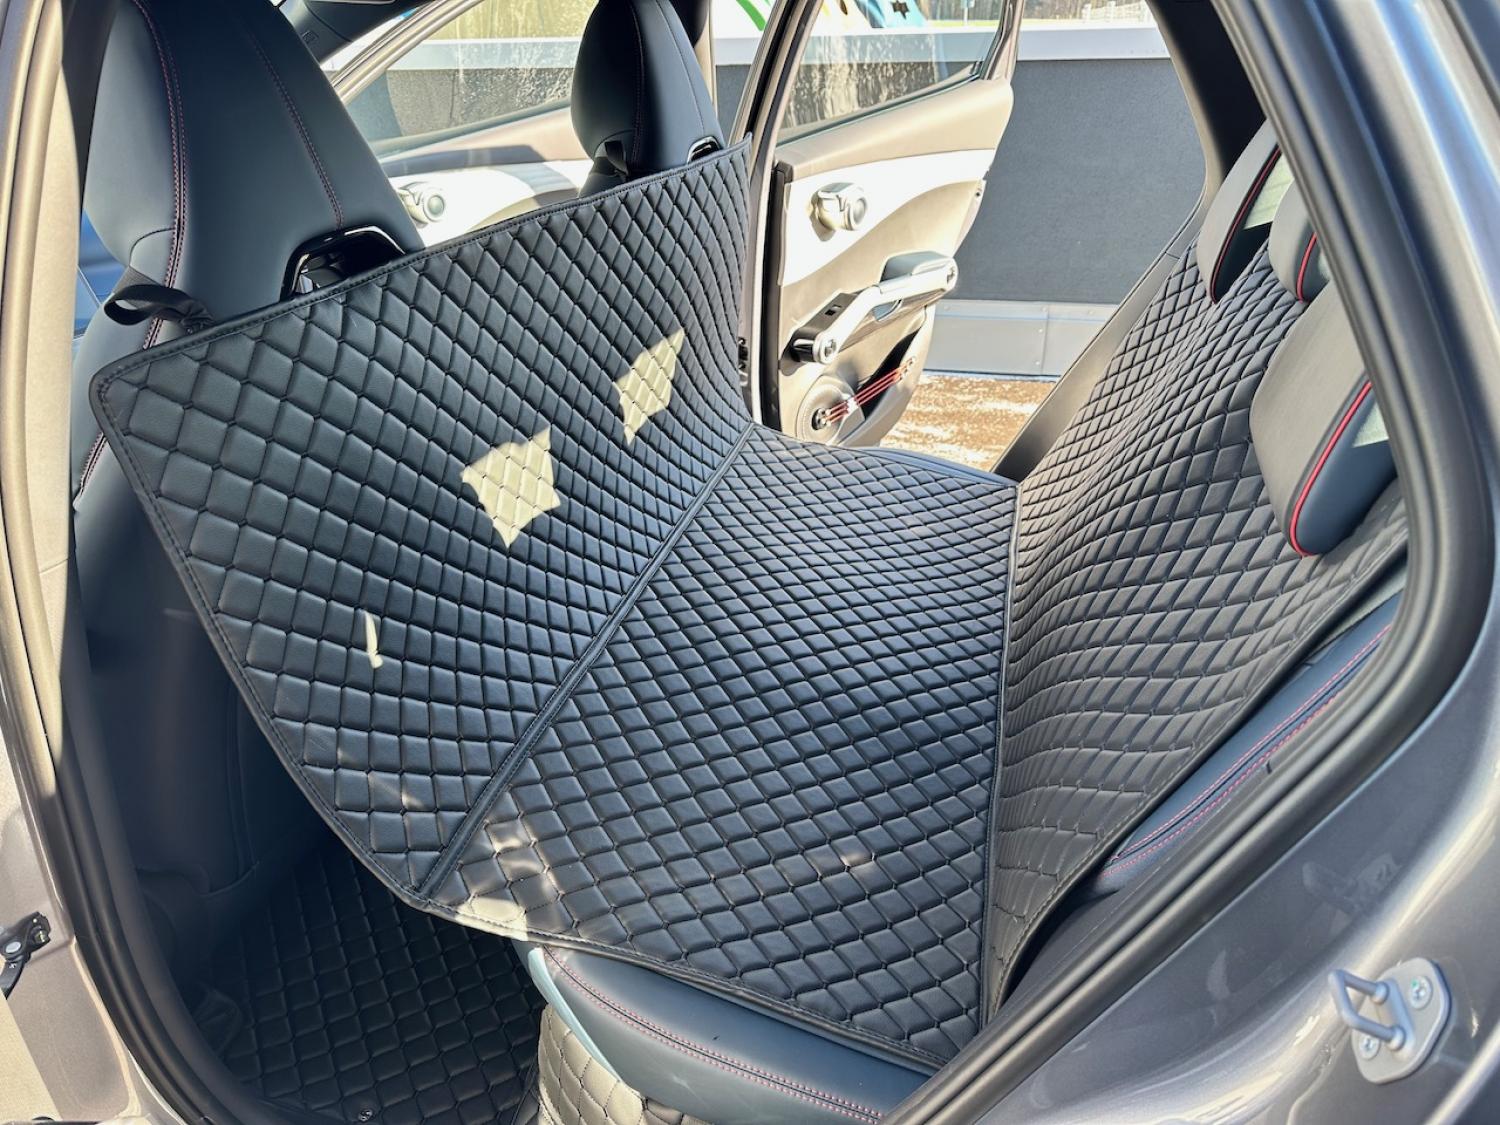 CARSTYLER® Back Seat Cover Geeignet Für VW Passat Variant B7, 3C, 2010-2014